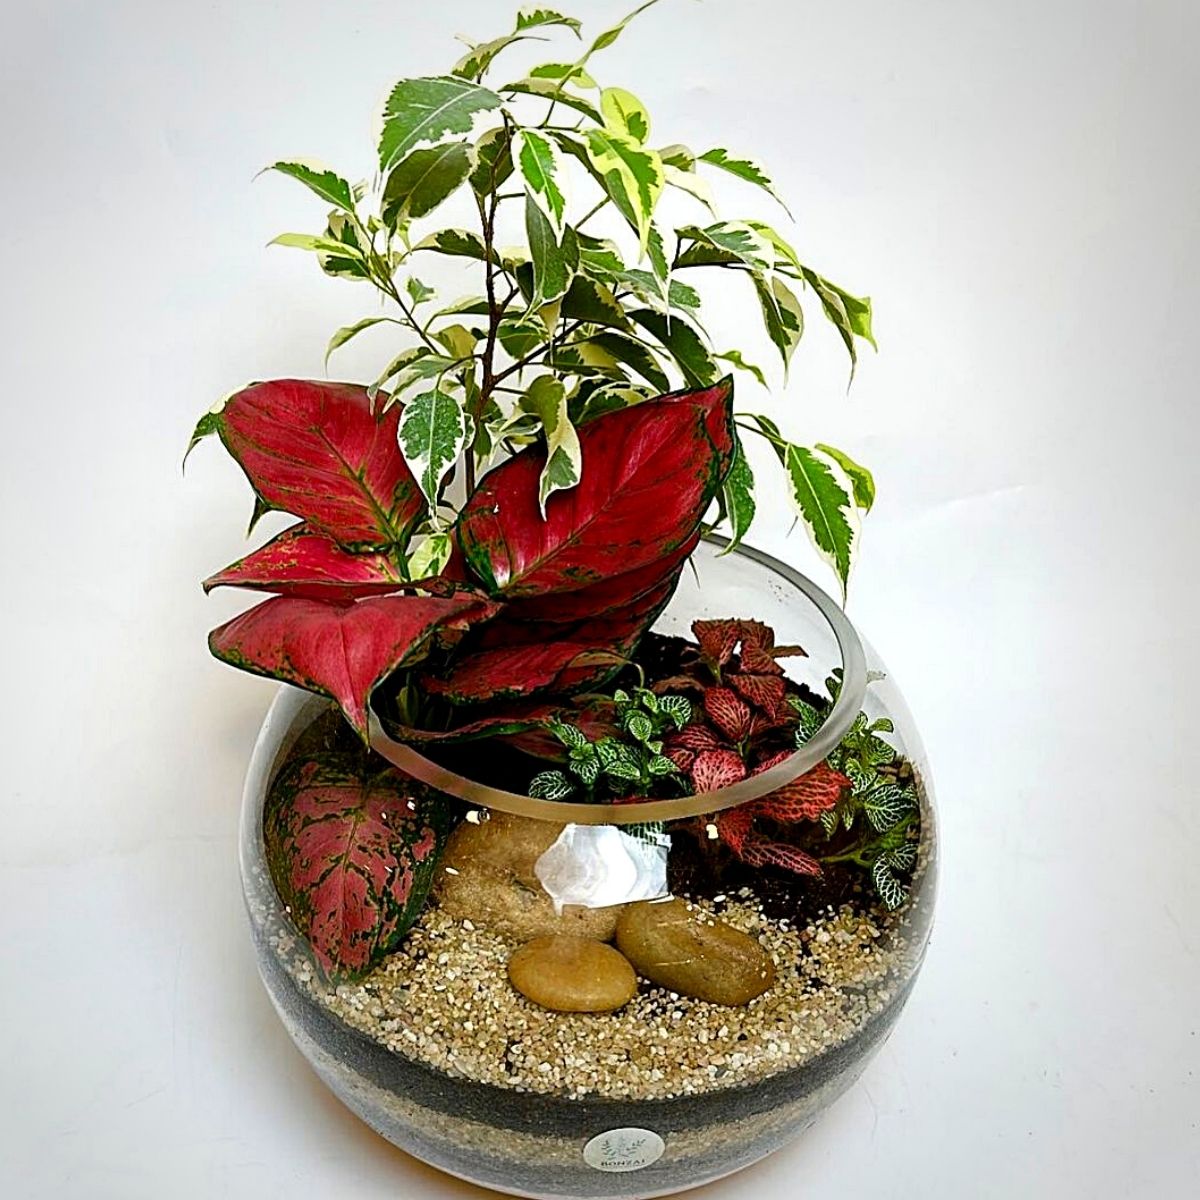 Polka dot plant terrarium